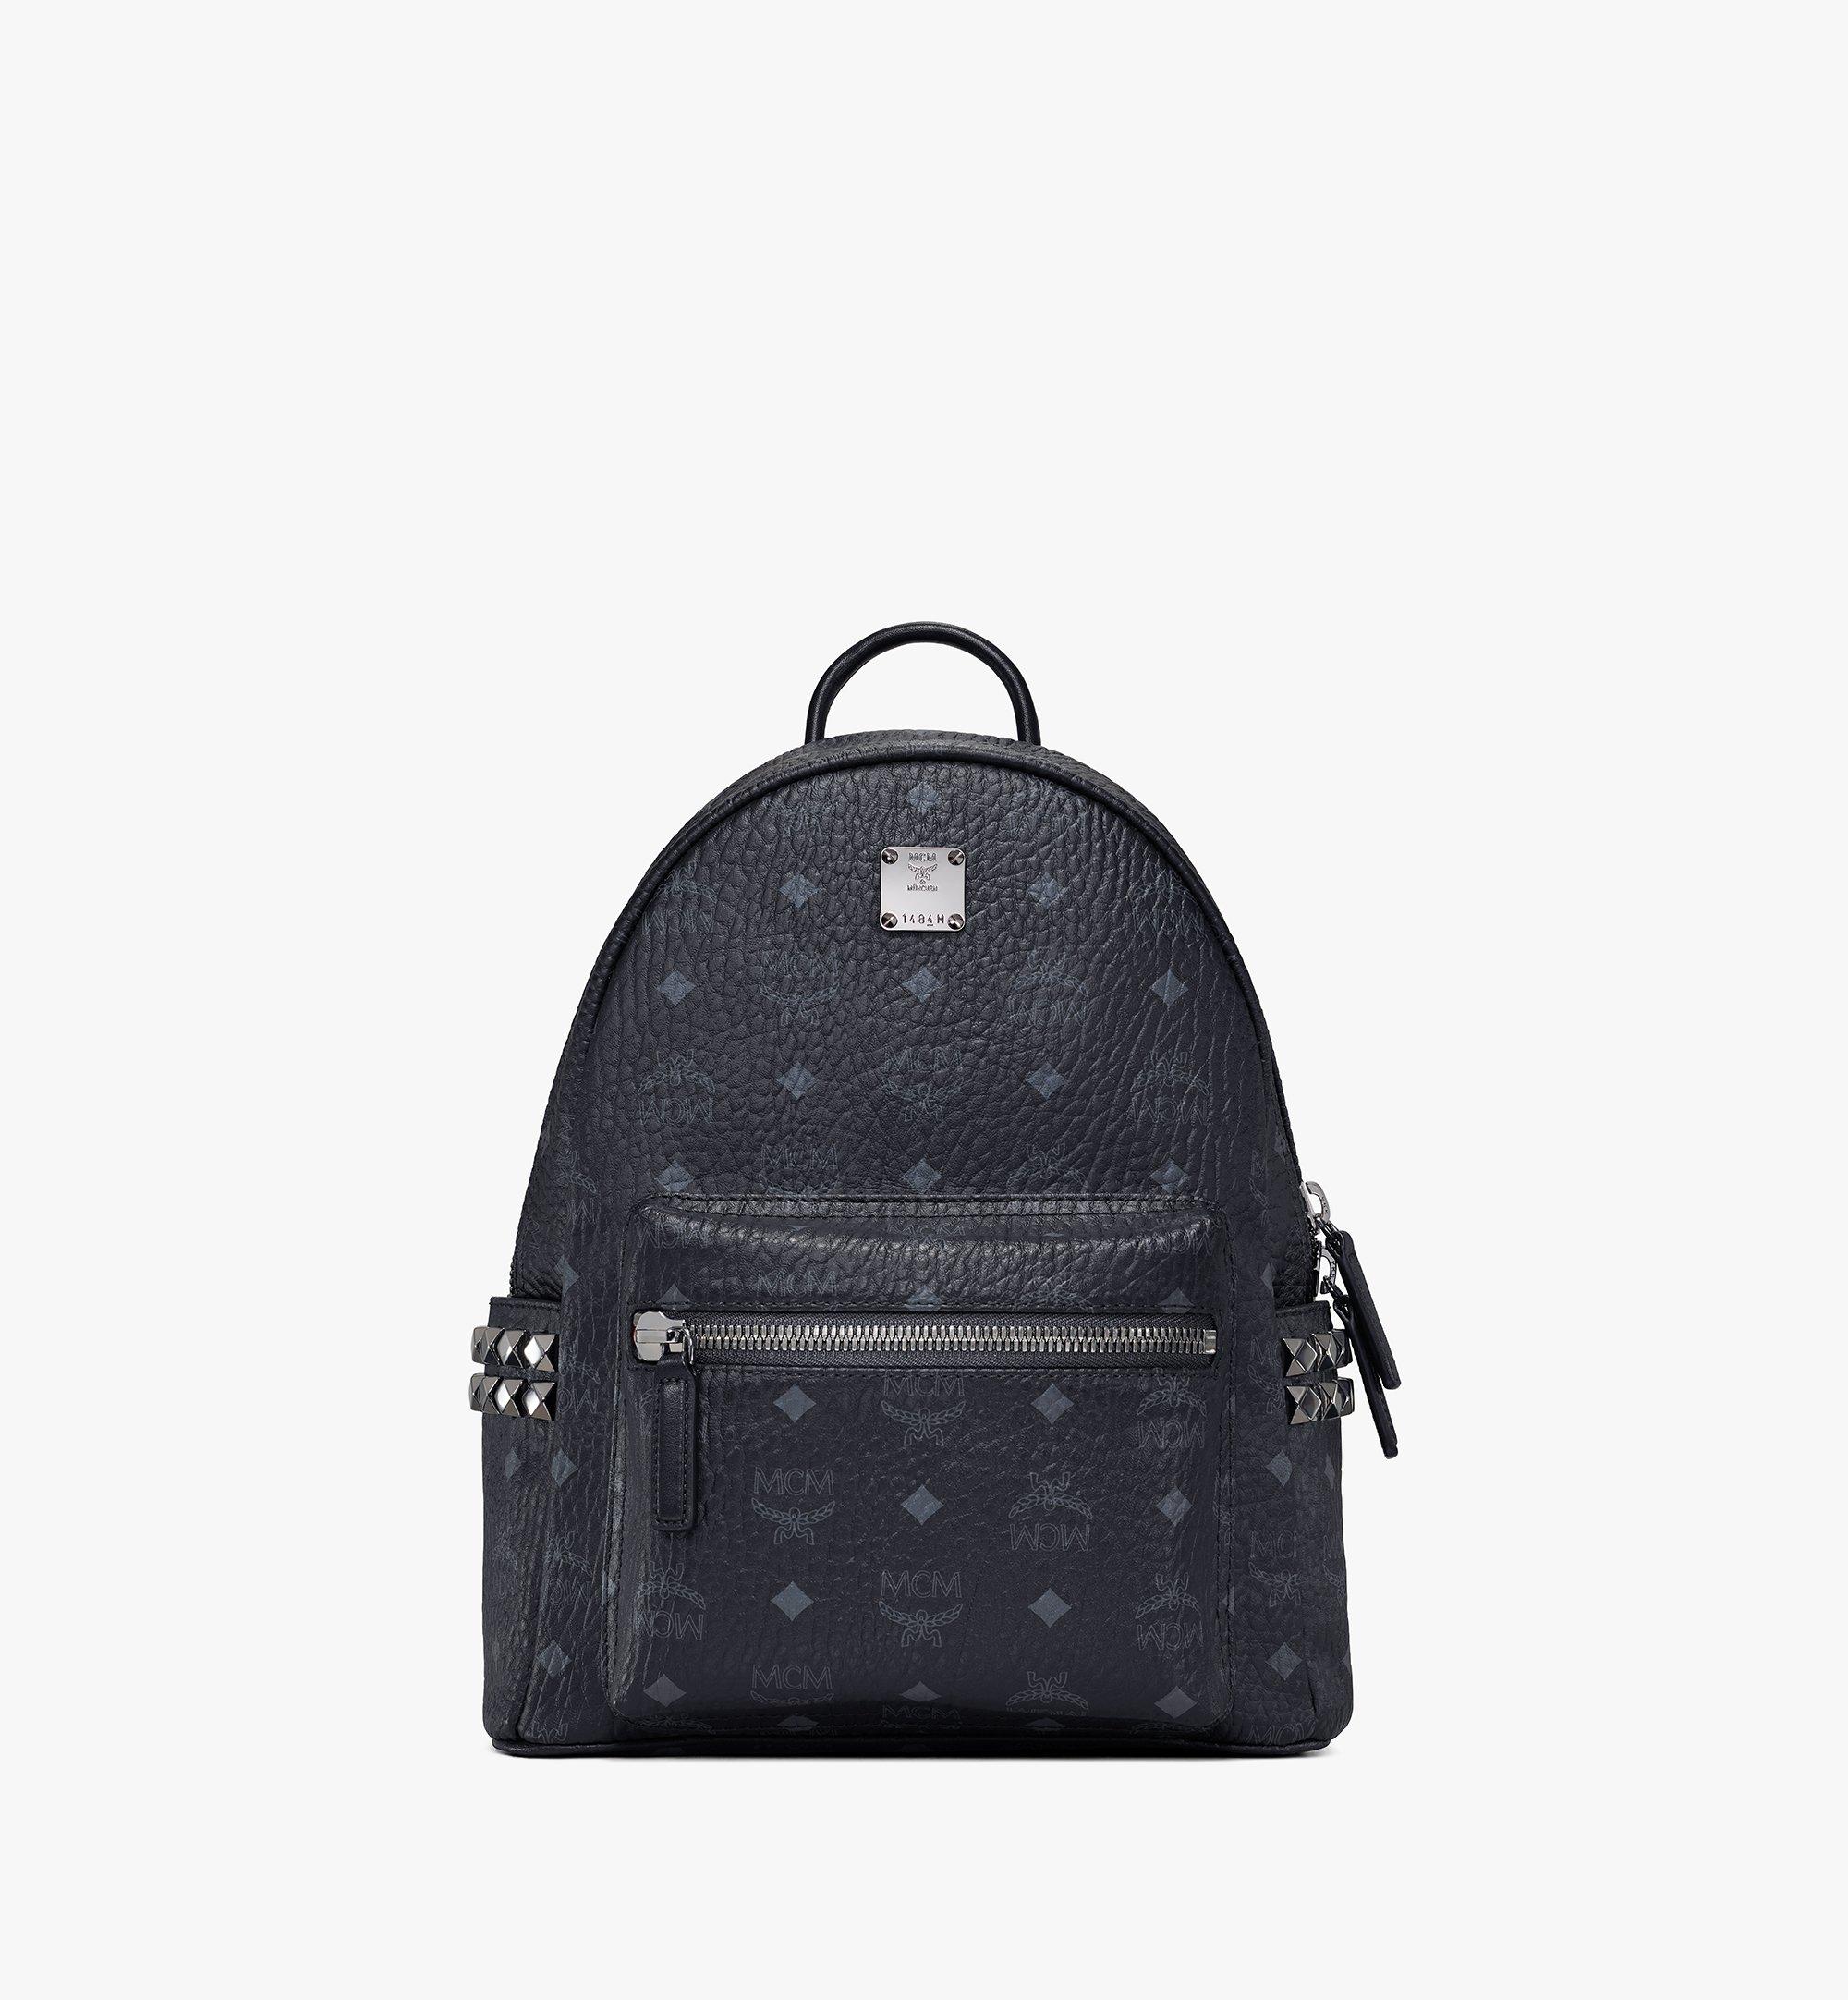 Designer Leather Backpacks For Women | MCM® US